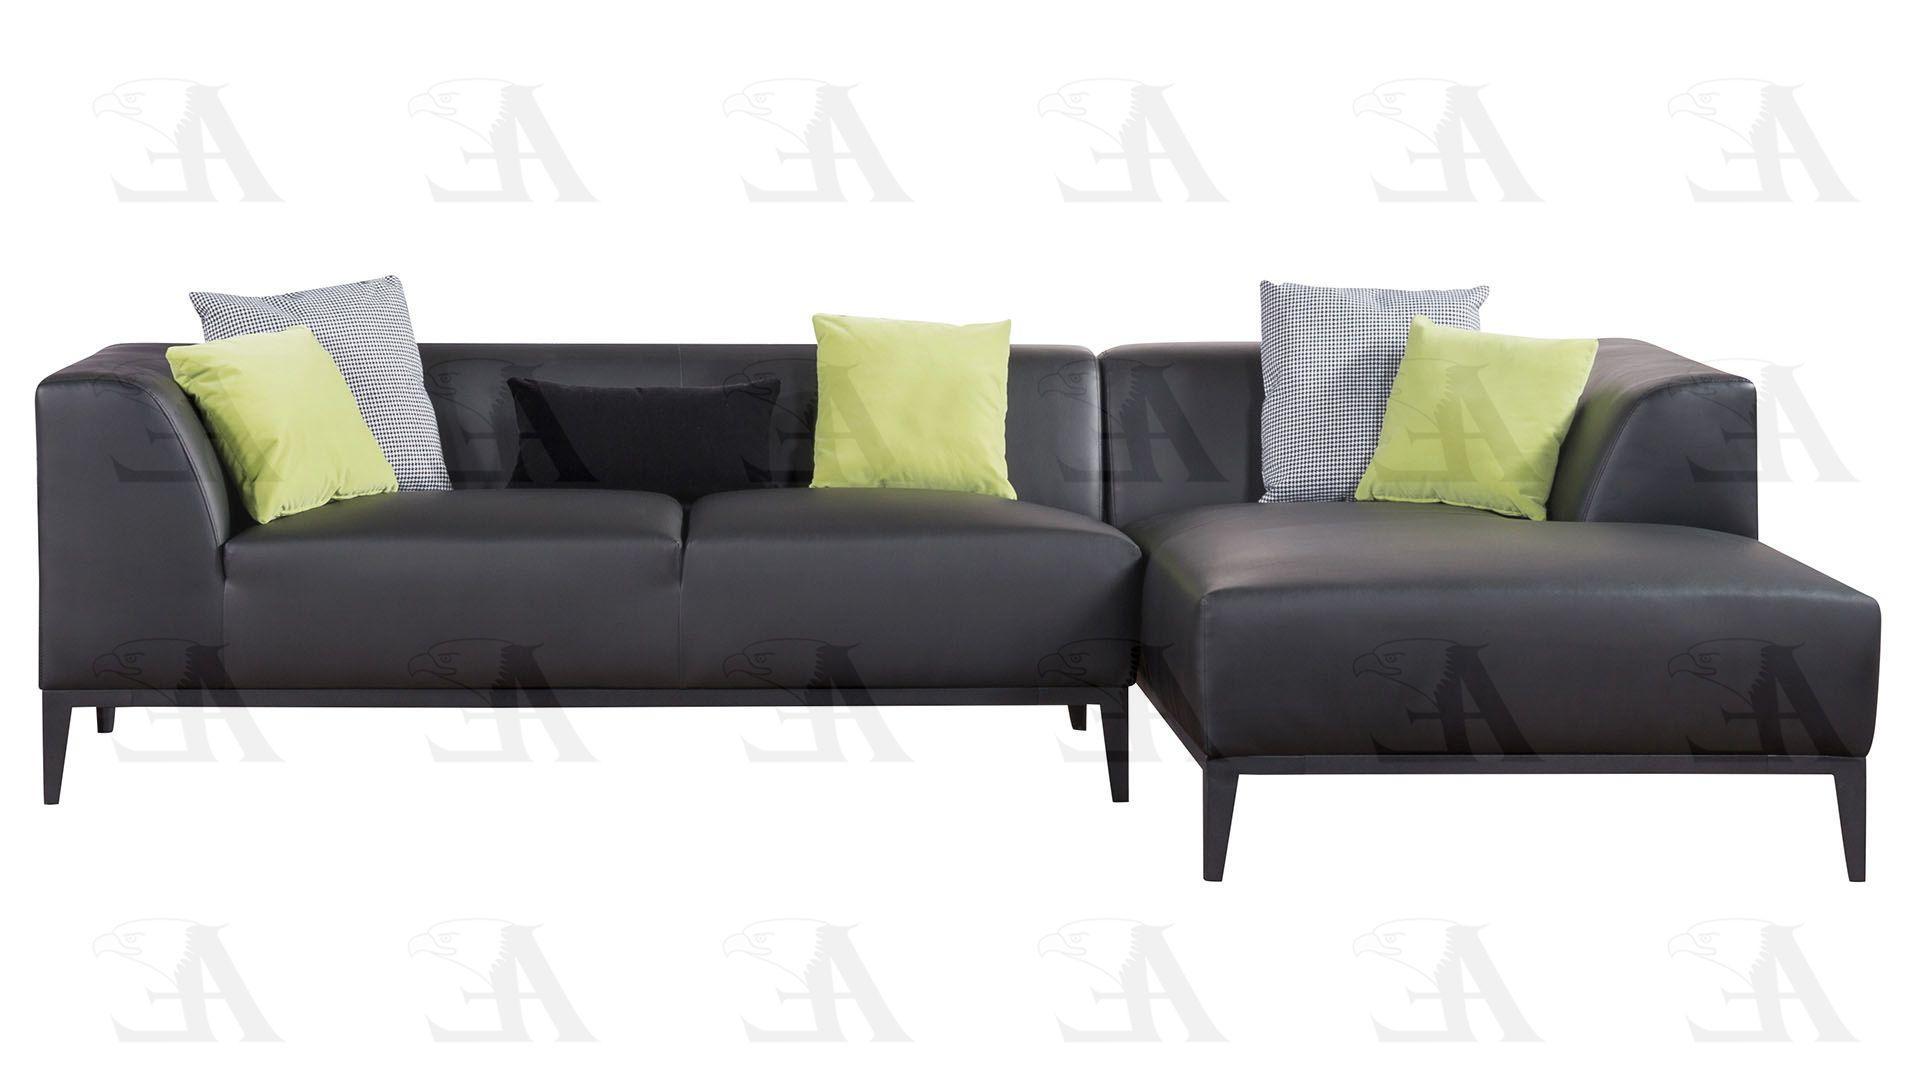 

    
American Eagle Furniture AE-LD818-BK Sofas and Chaise Black AE-LD818-BK Set-3 RHC
